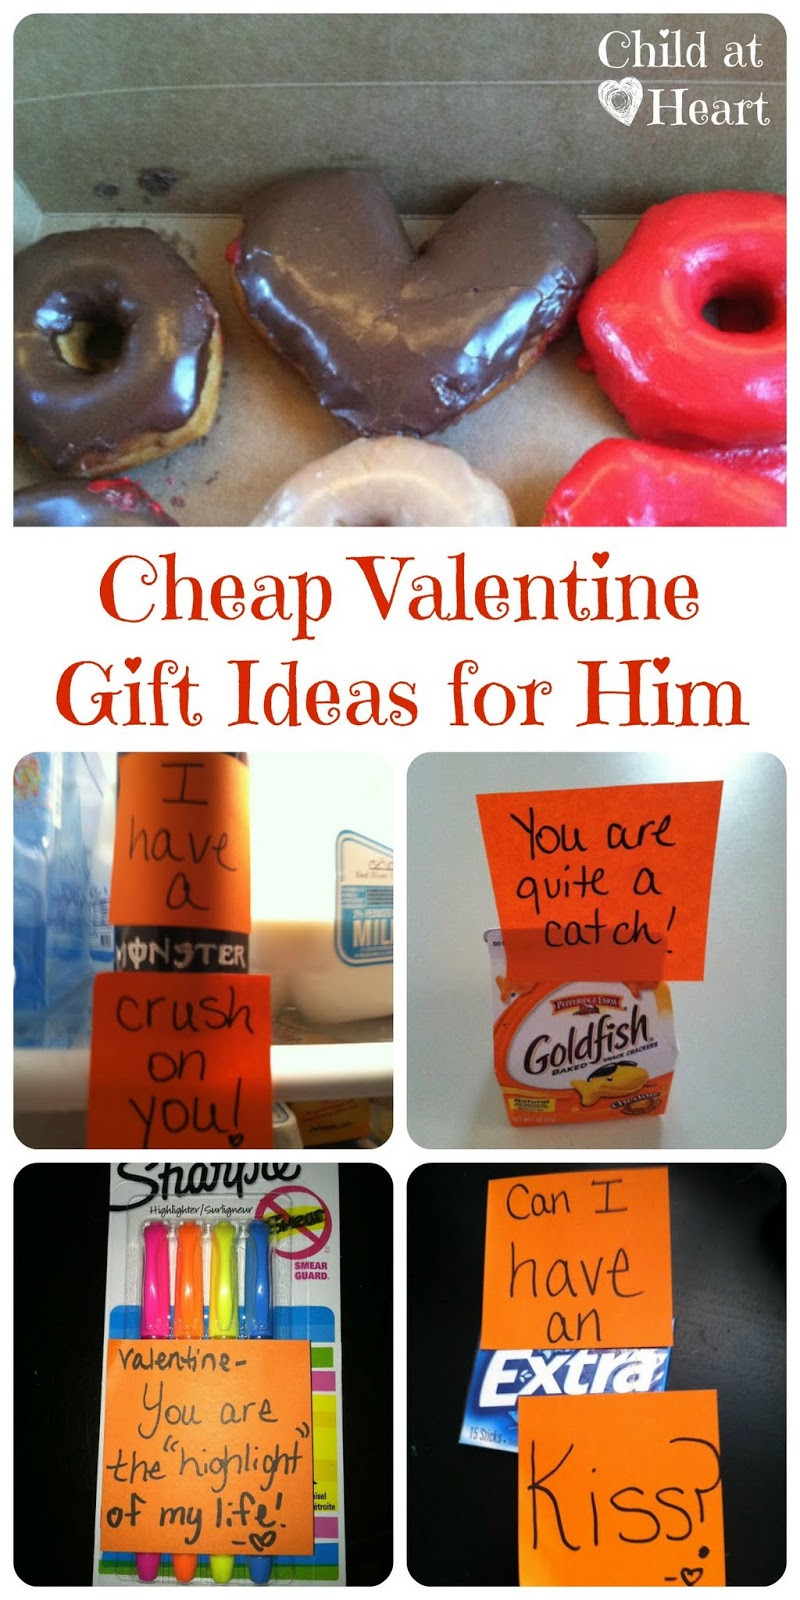 Valentine Day Gift Ideas Him
 Cheap Valentine Gift Ideas for Him Child at Heart Blog